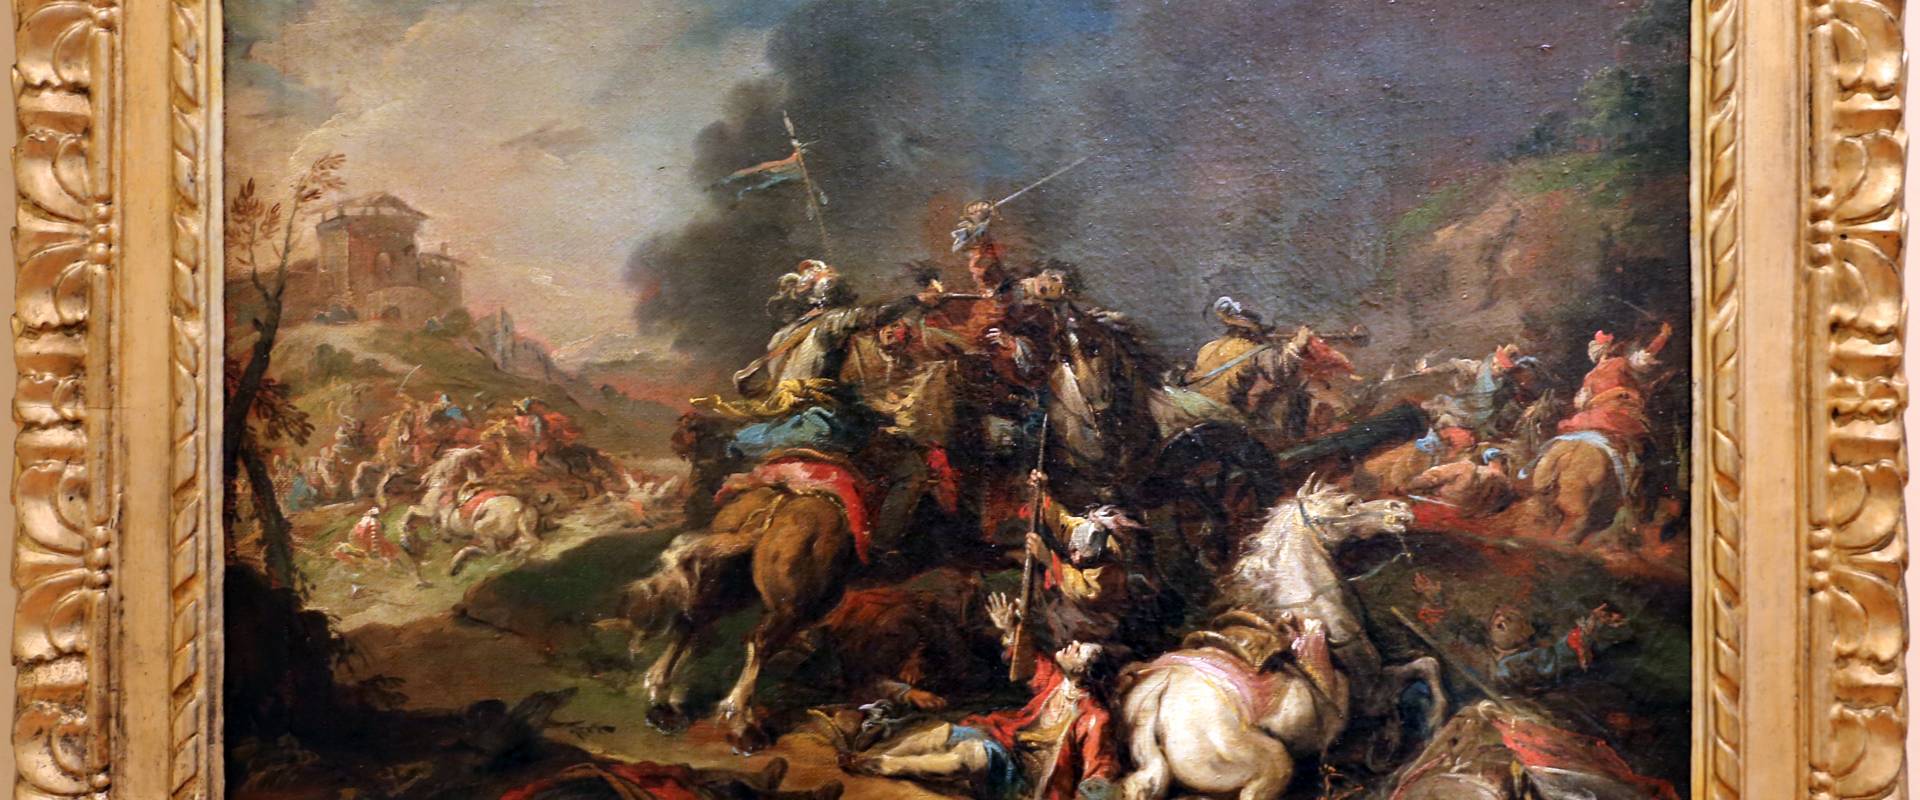 Nicola bertuzzi, scena di battaglia, 1750-70 ca. 01 foto di Sailko